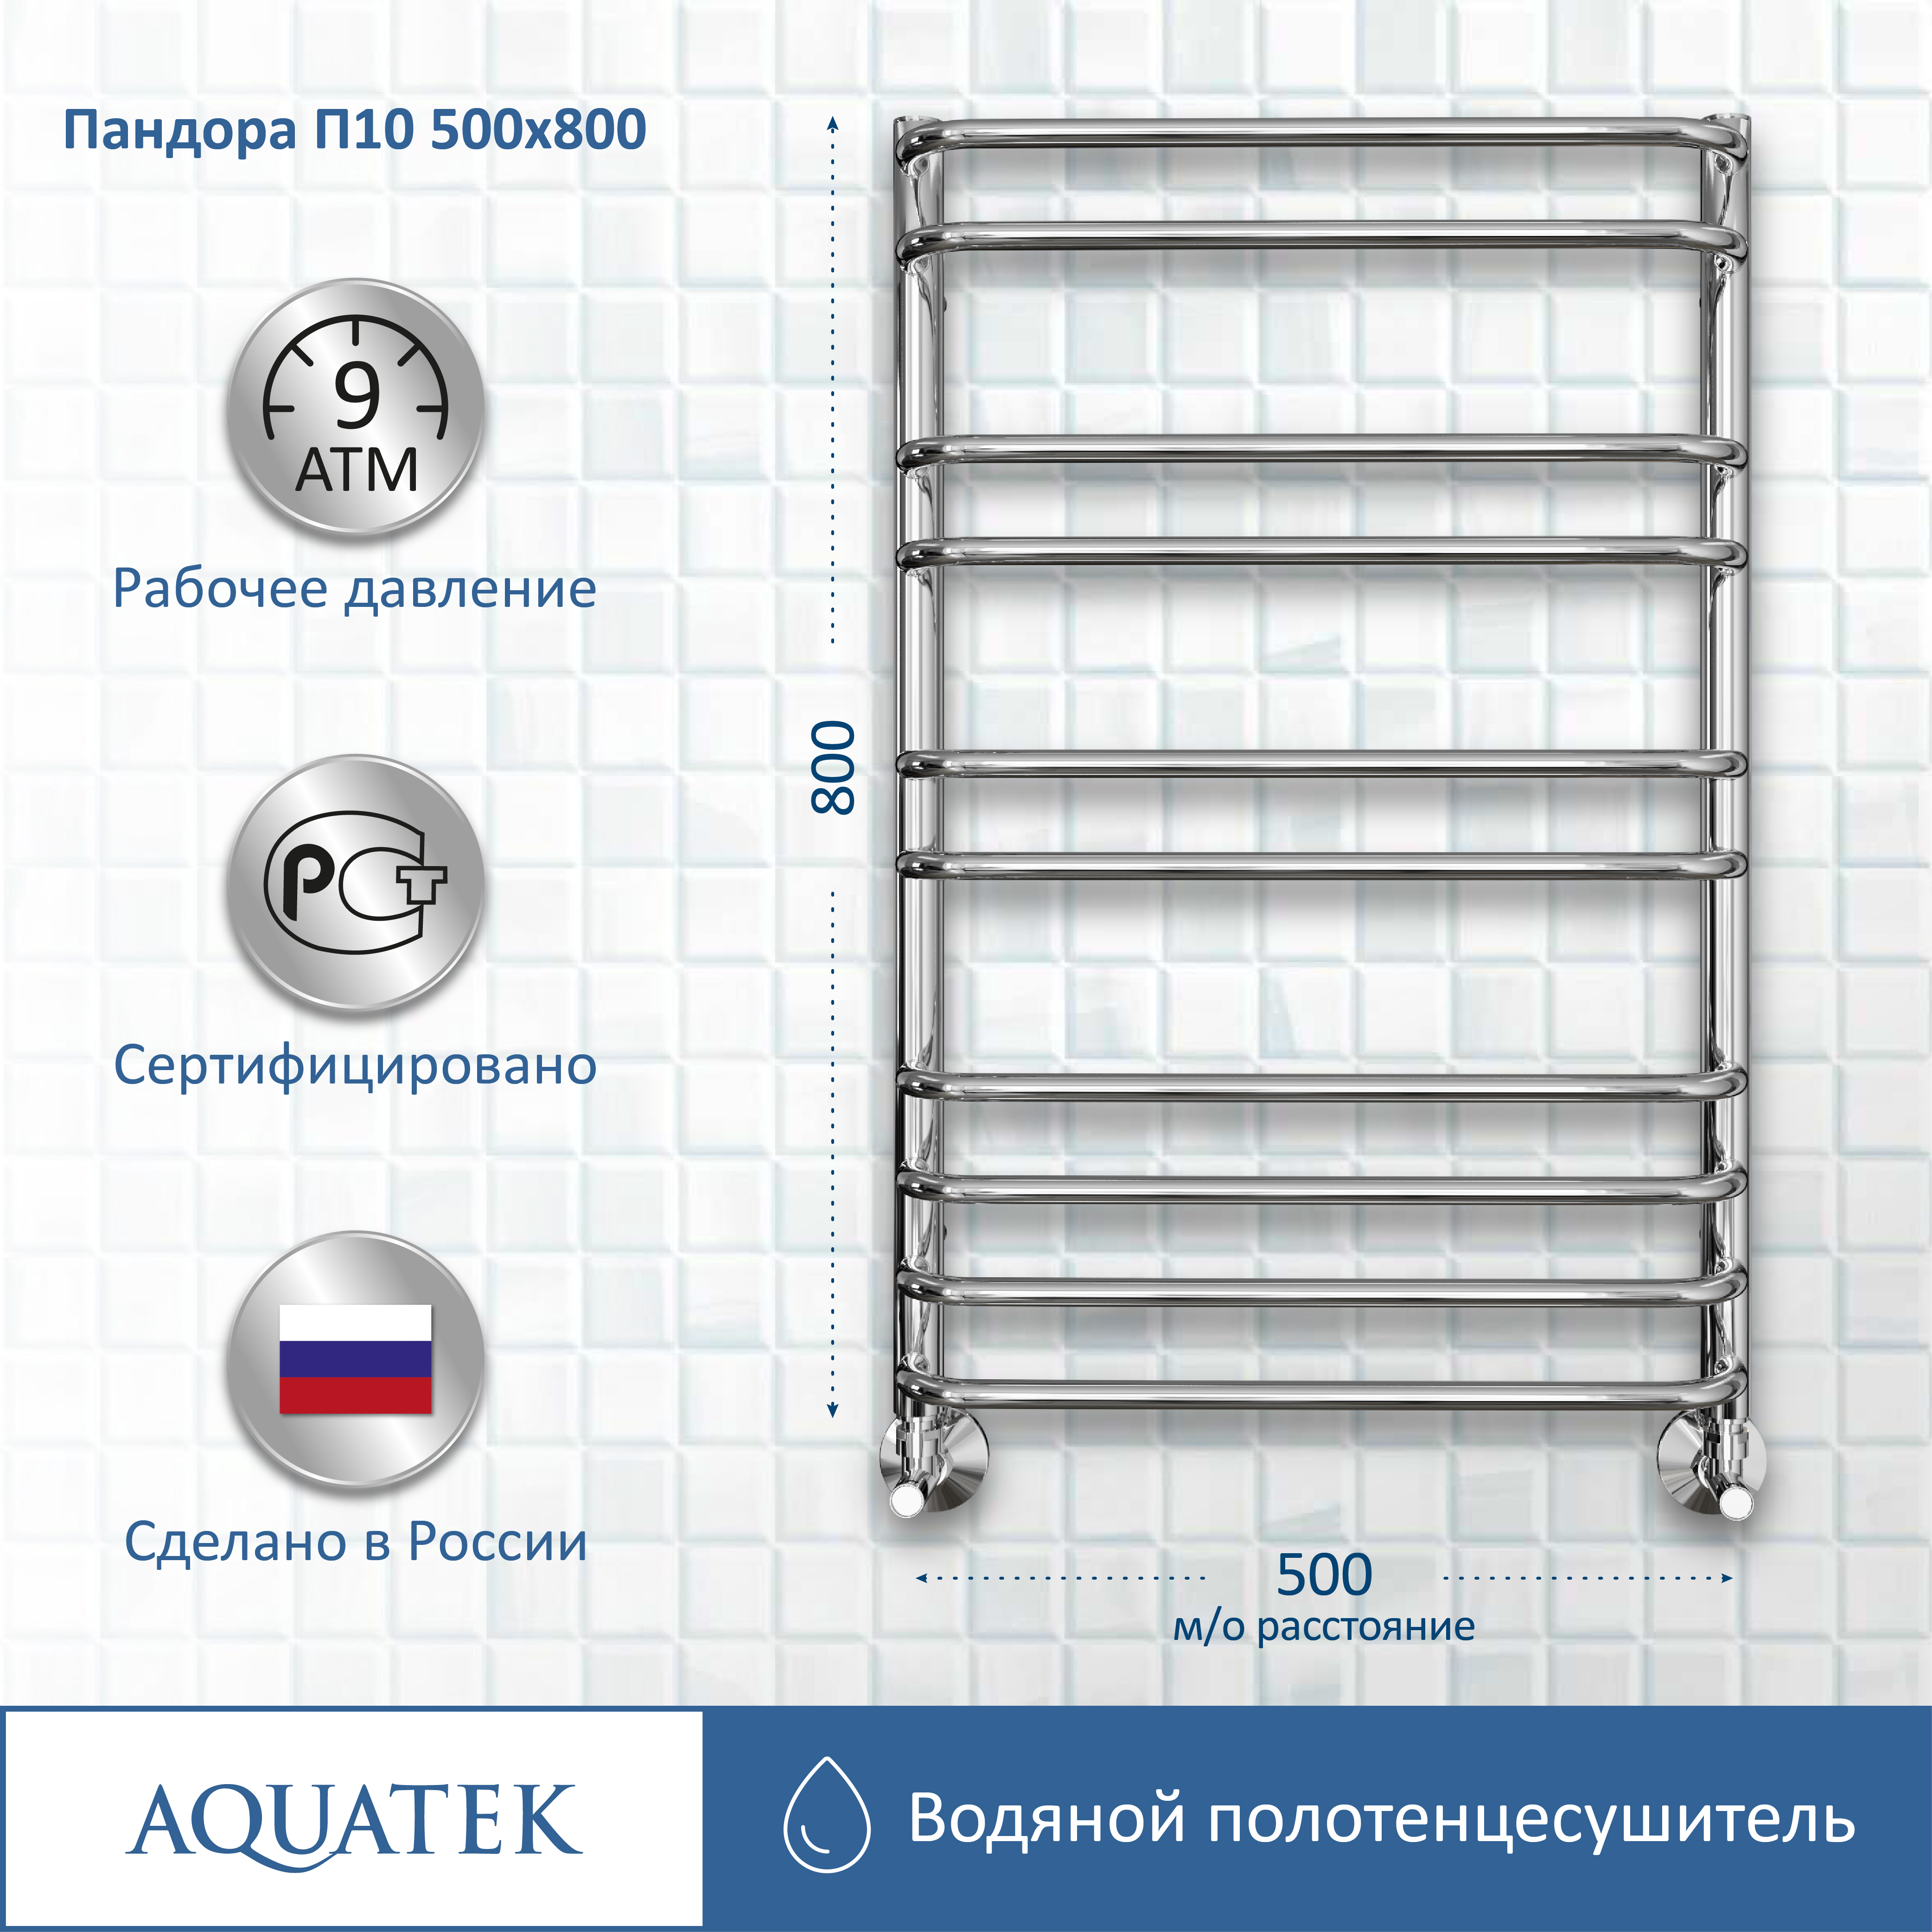 Полотенцесушитель водяной Aquatek Пандора П10 500х800 AQ RRС1080CH - 11